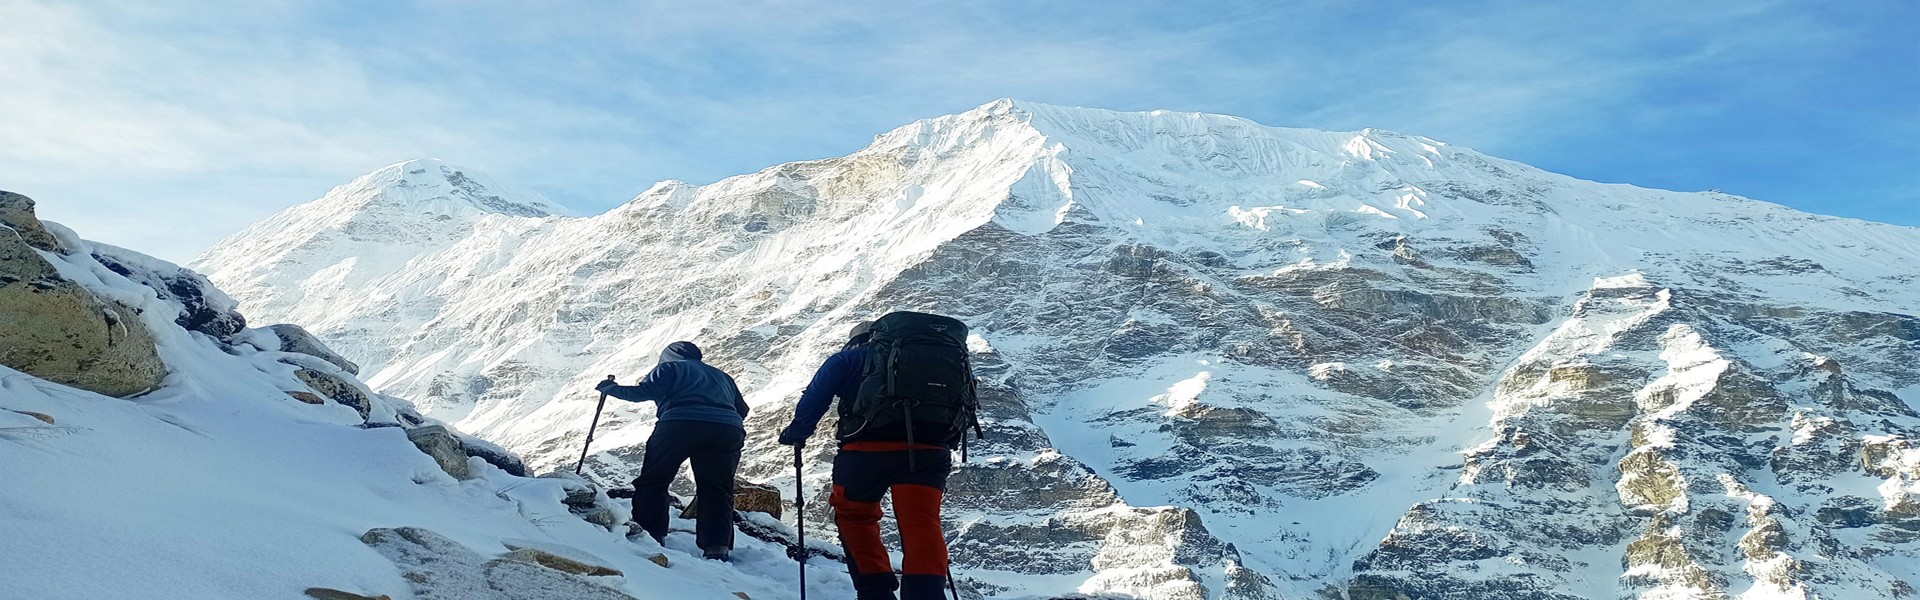 Kanchenjunga: Trekking Guide for Adventure Enthusiasts